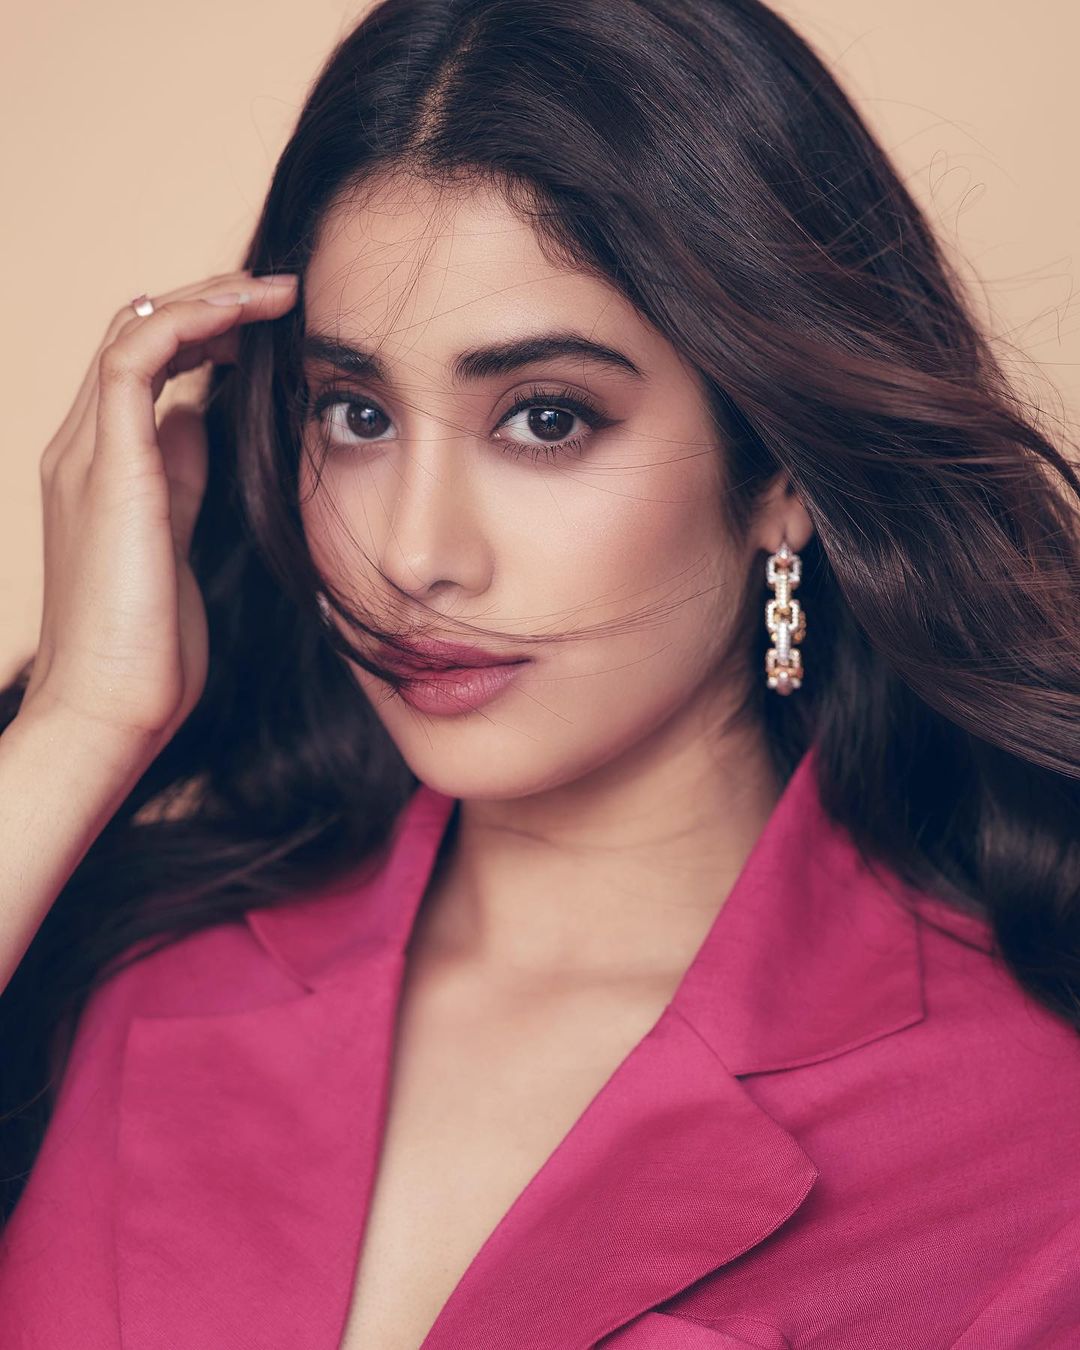  Janhvi Kapoor looks pretty in the light makeup look. (Image: Instagram)